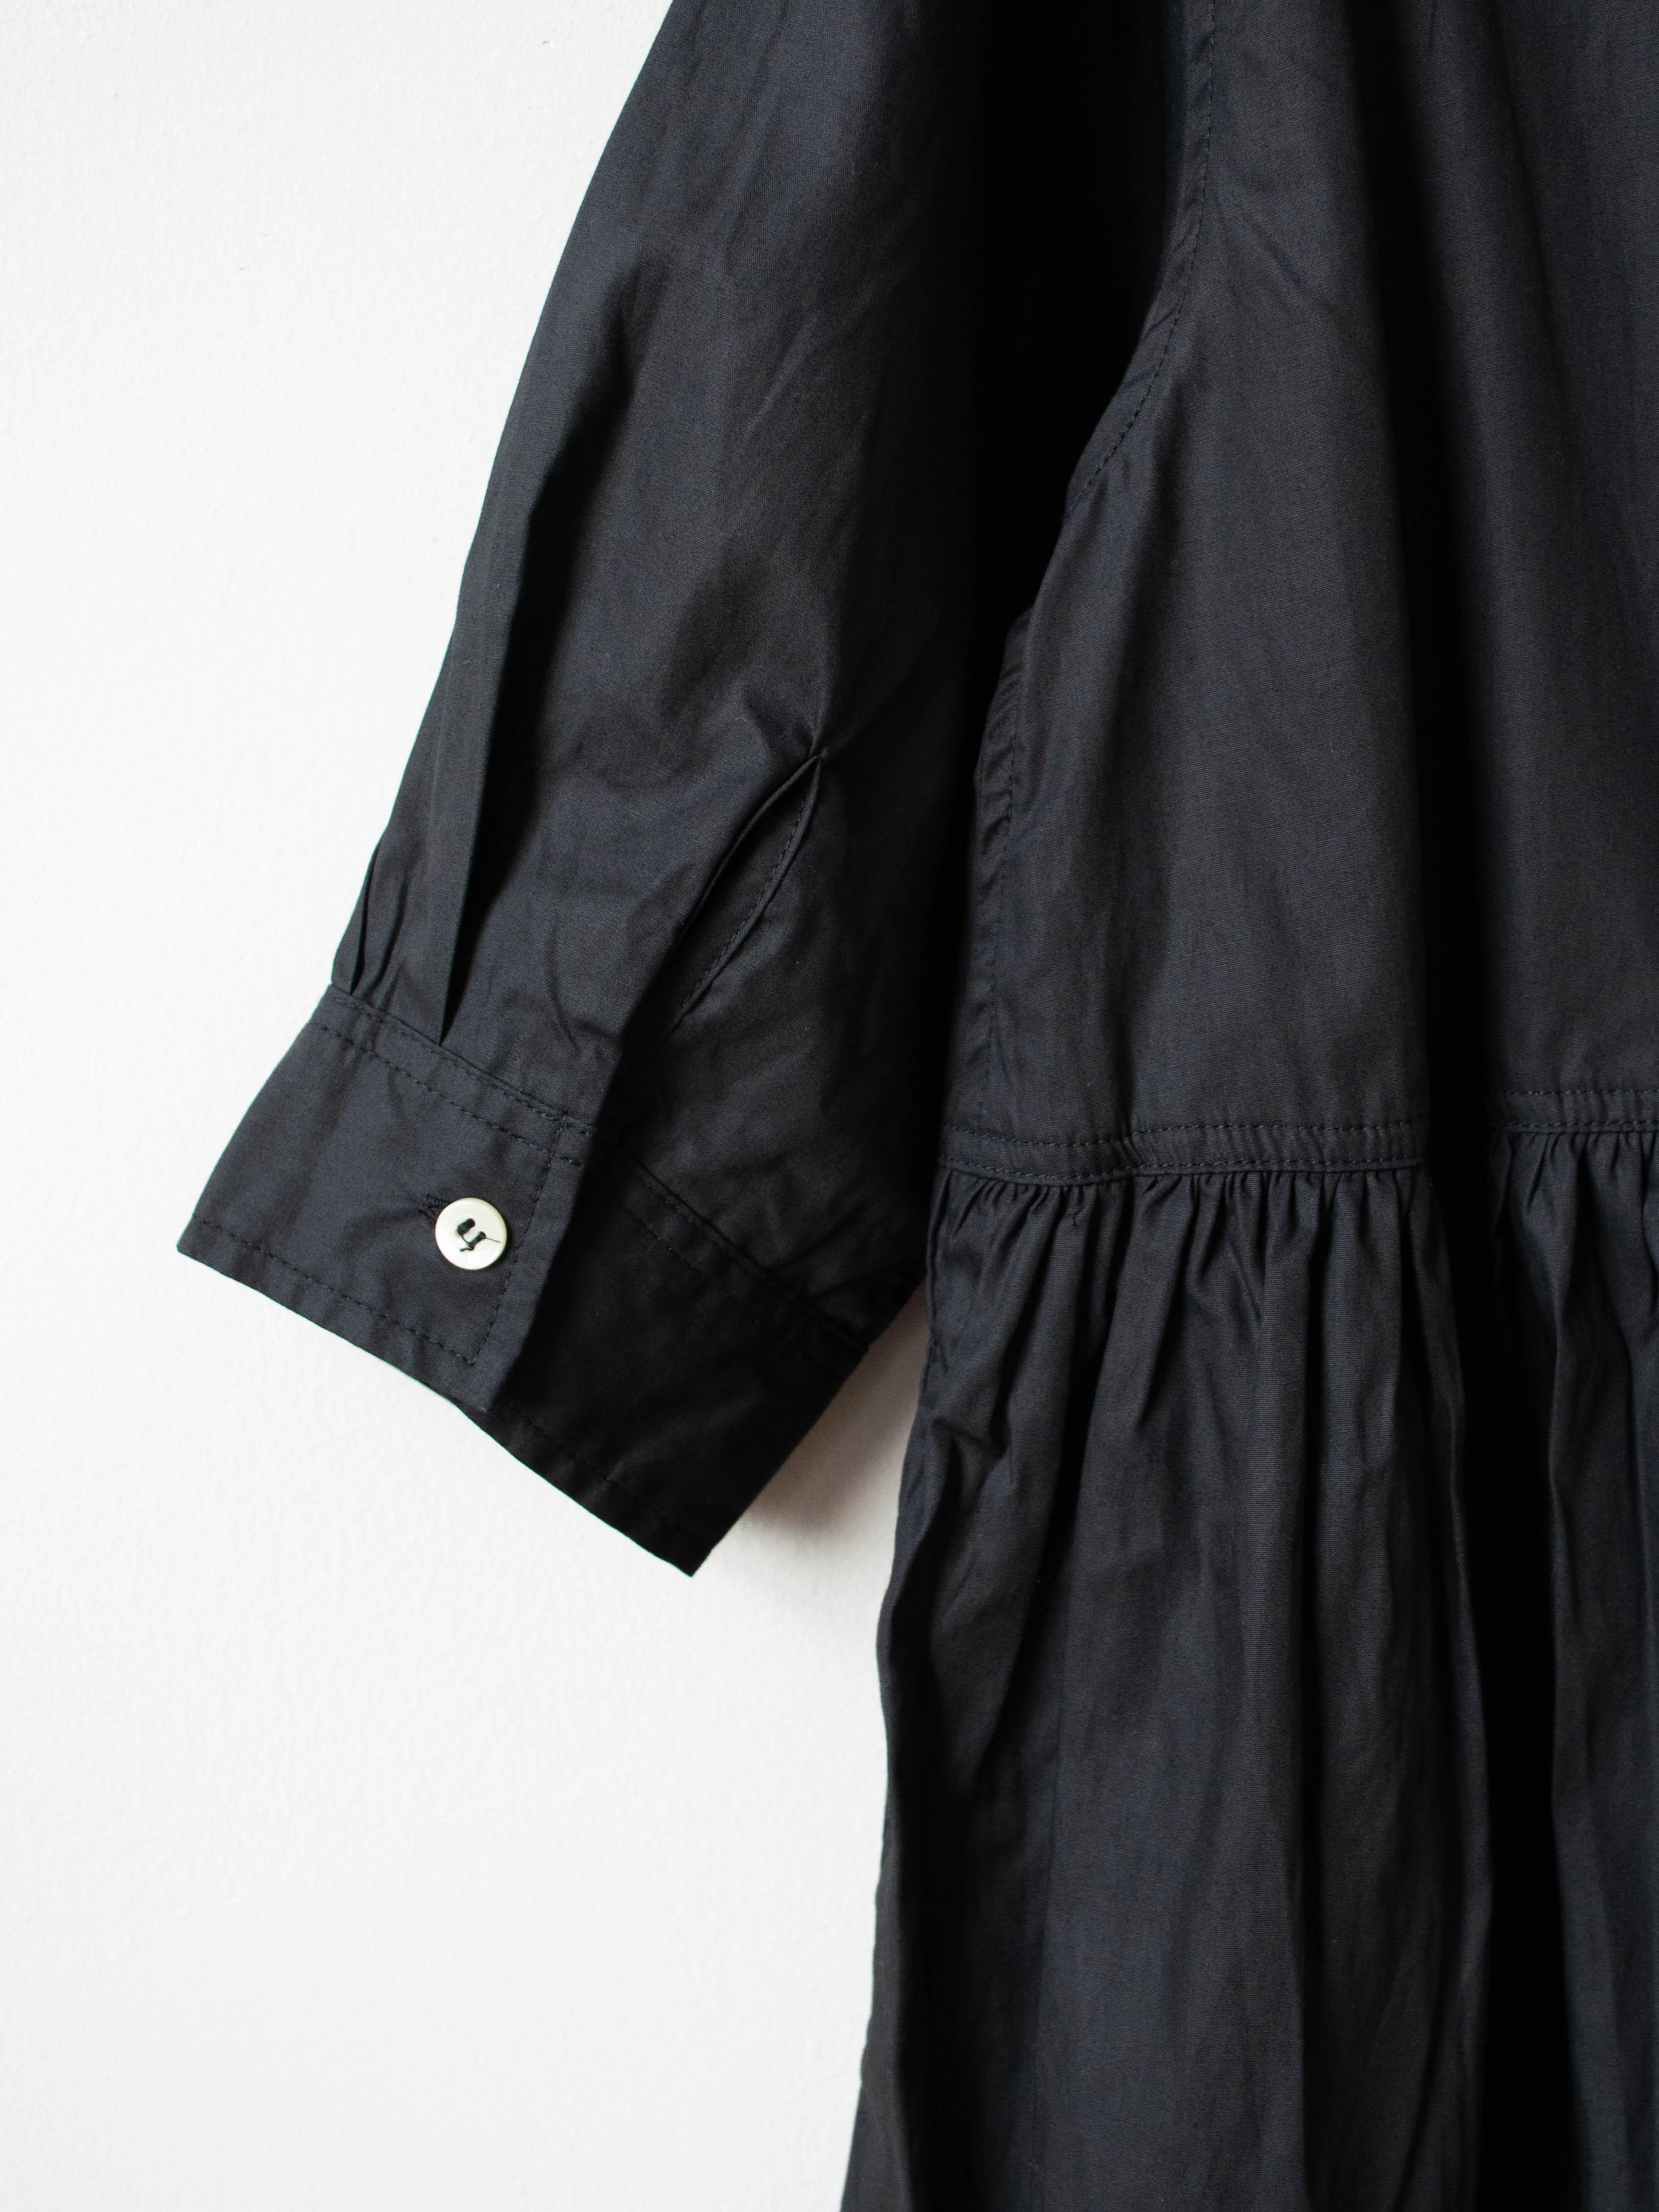 Namu Shop - Ichi Antiquites Crisp Band Collar Shirt Dress - Black